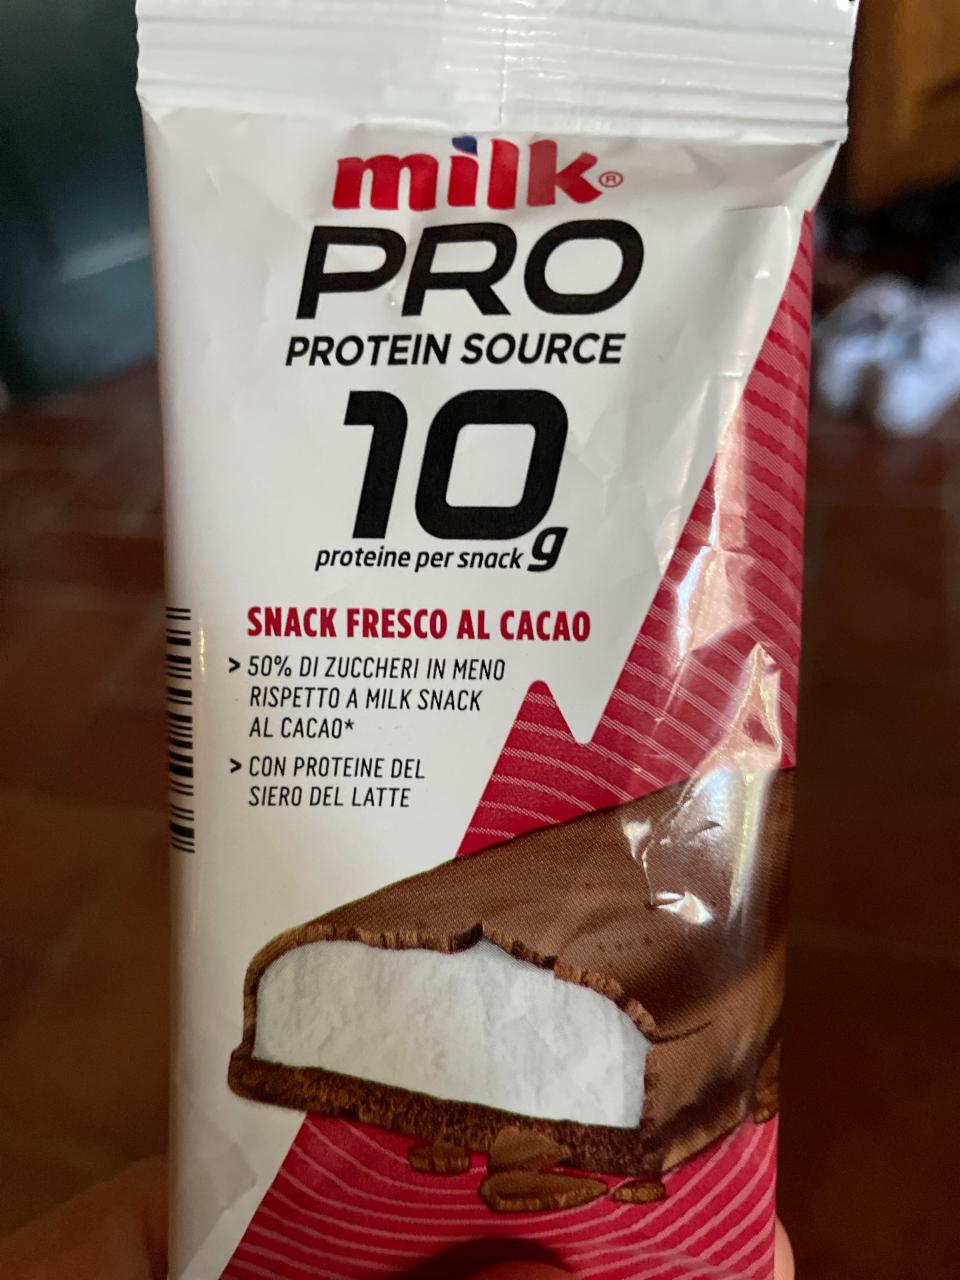 Fotografie - Pro Protein Source 40g Snack Fresco al Cacao Milk